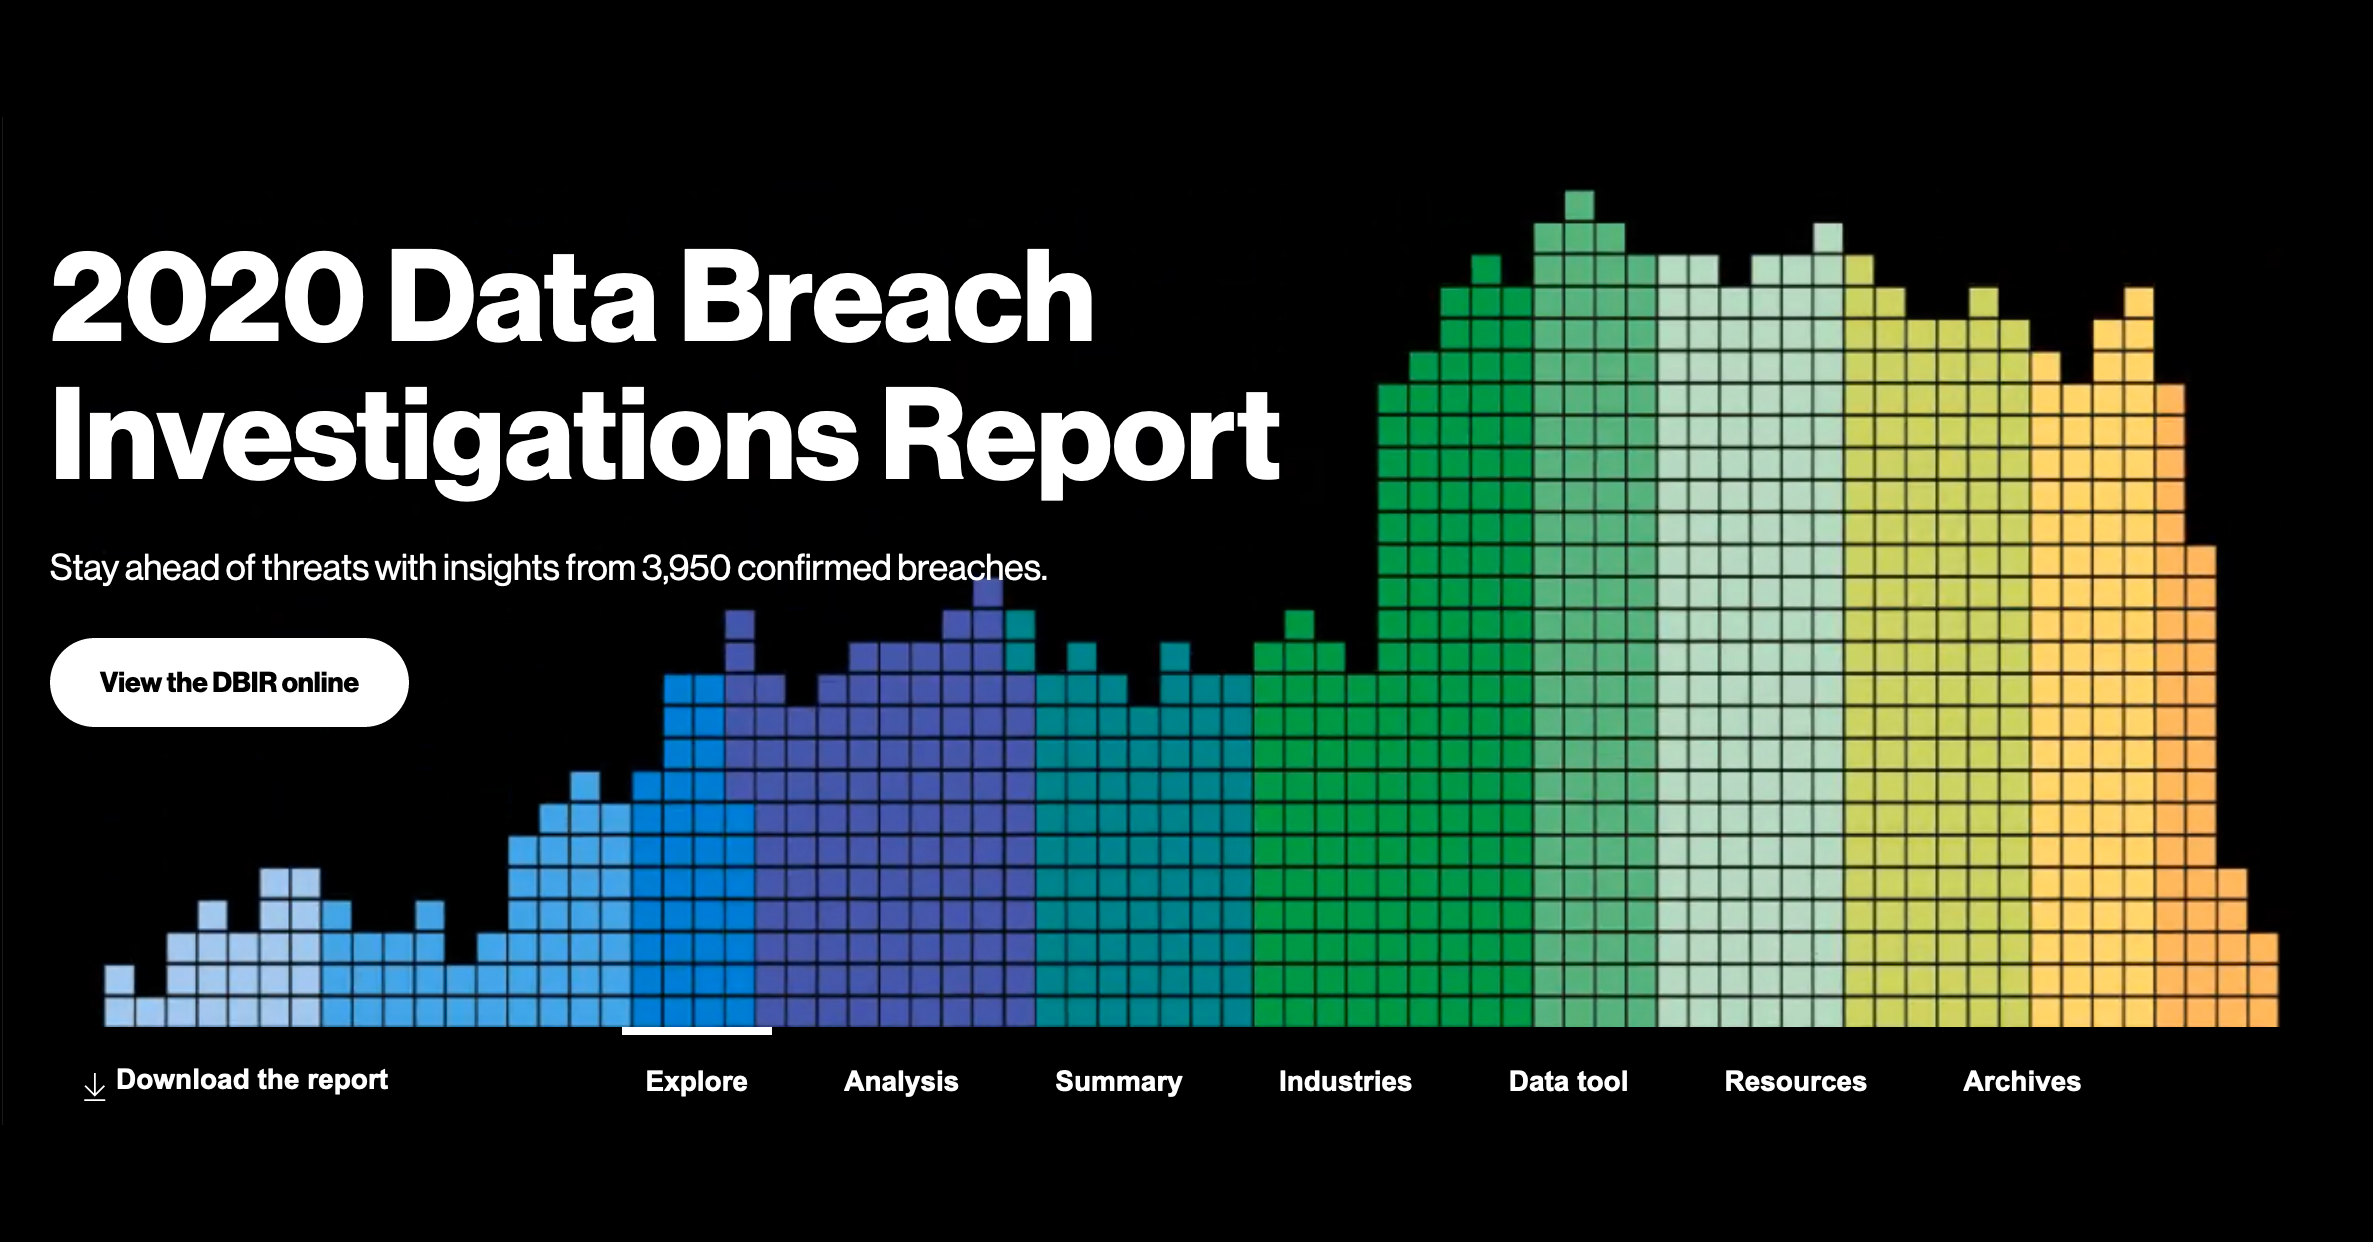 Money still makes the cyber-crime world go round – Verizon’s 2020 Data Breach Investigations Report is live decoding=